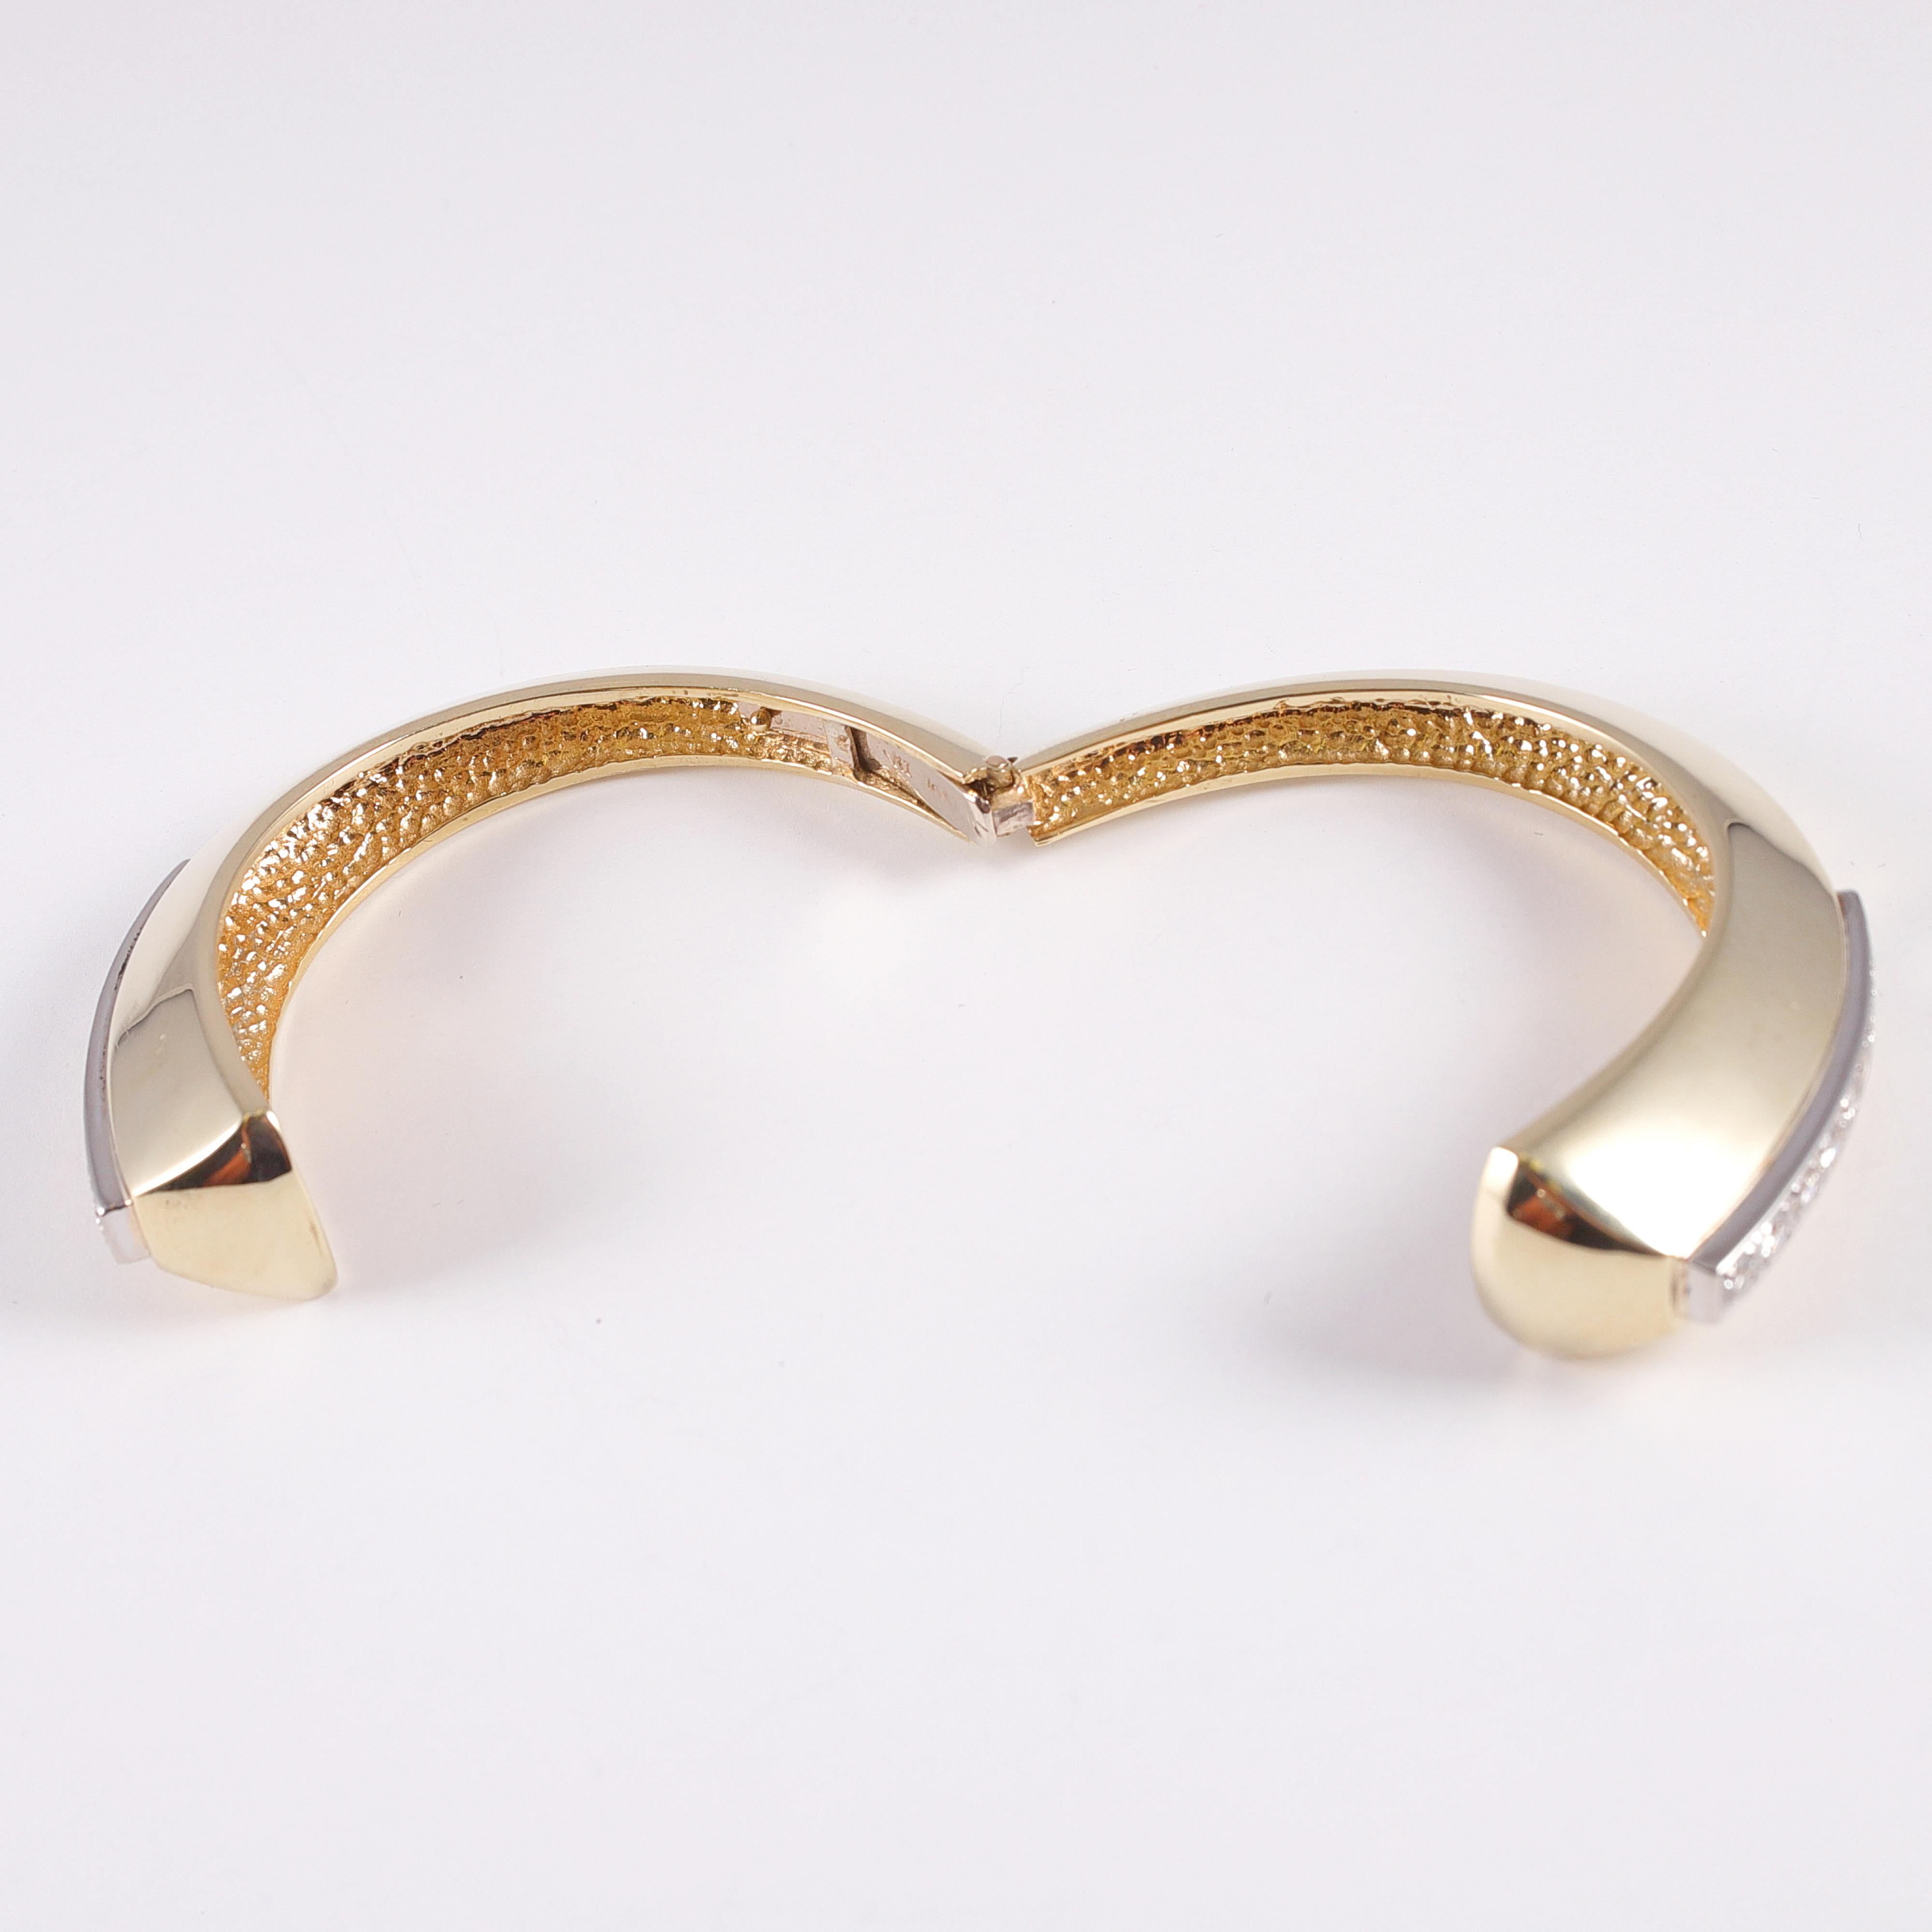 1.20 Carat Diamond Hinged Cuff Bracelet in 14 Karat Gold For Sale 1